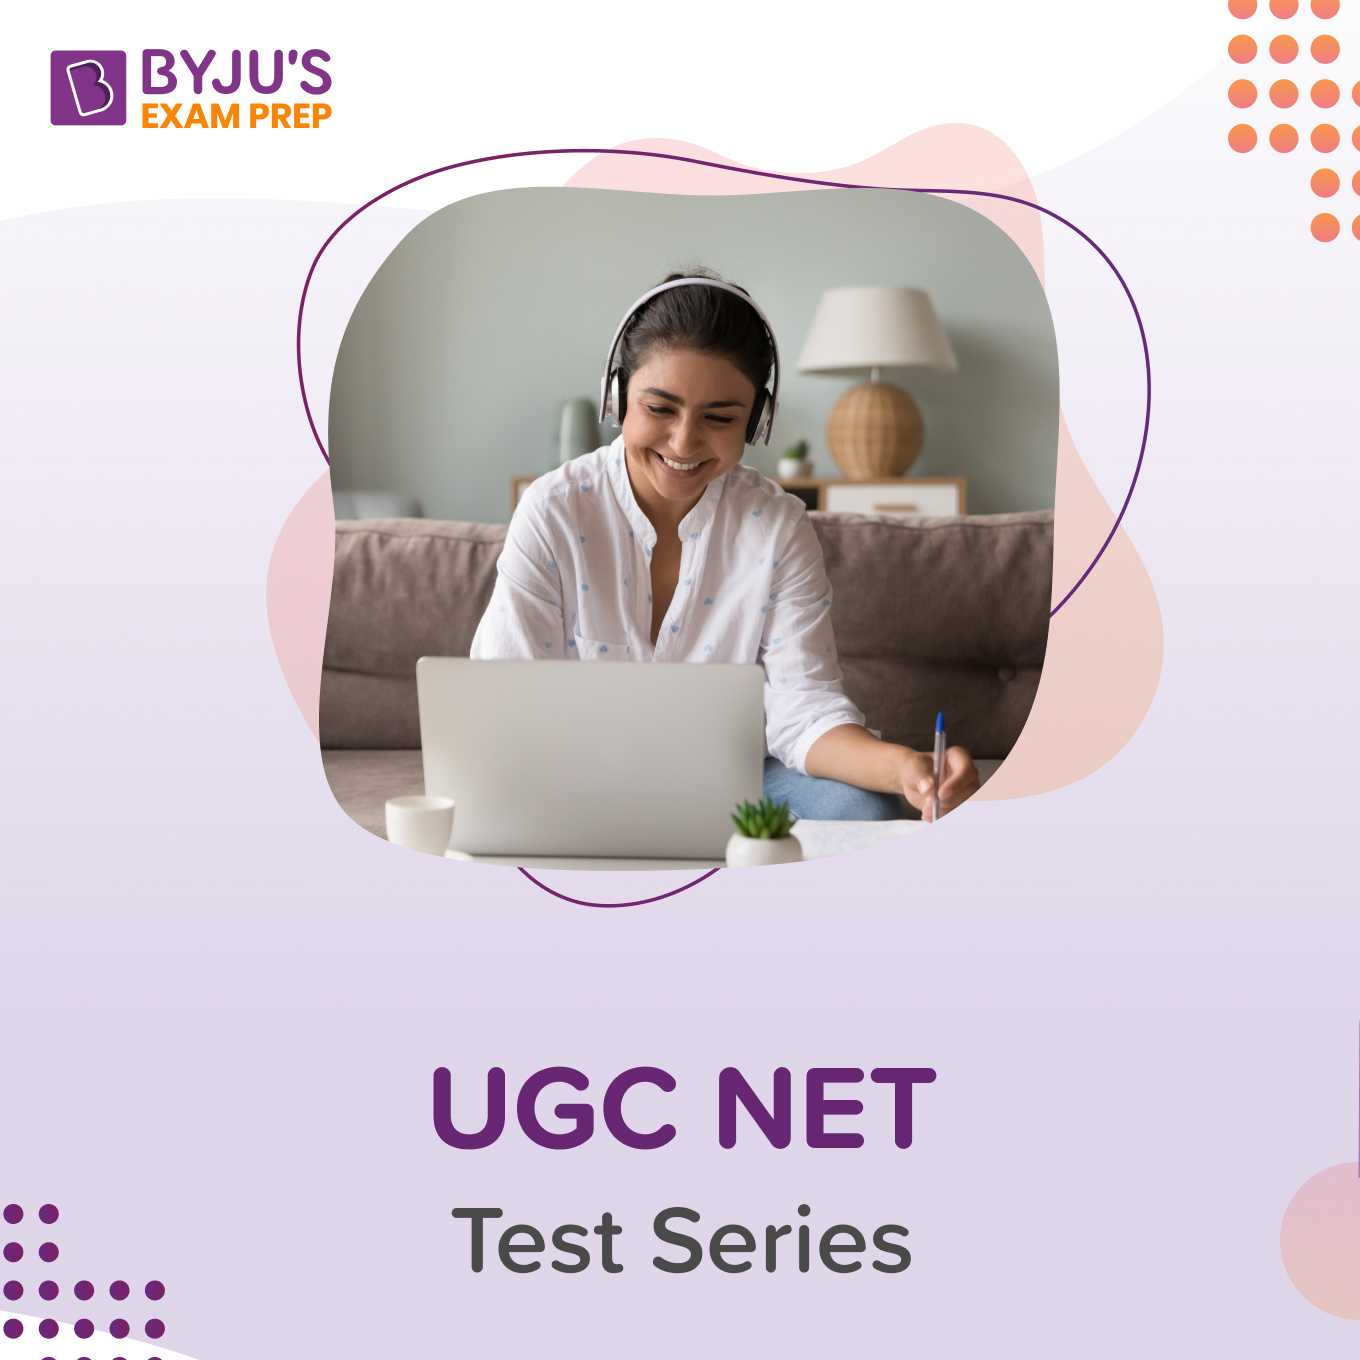 UGC NET - Test Series